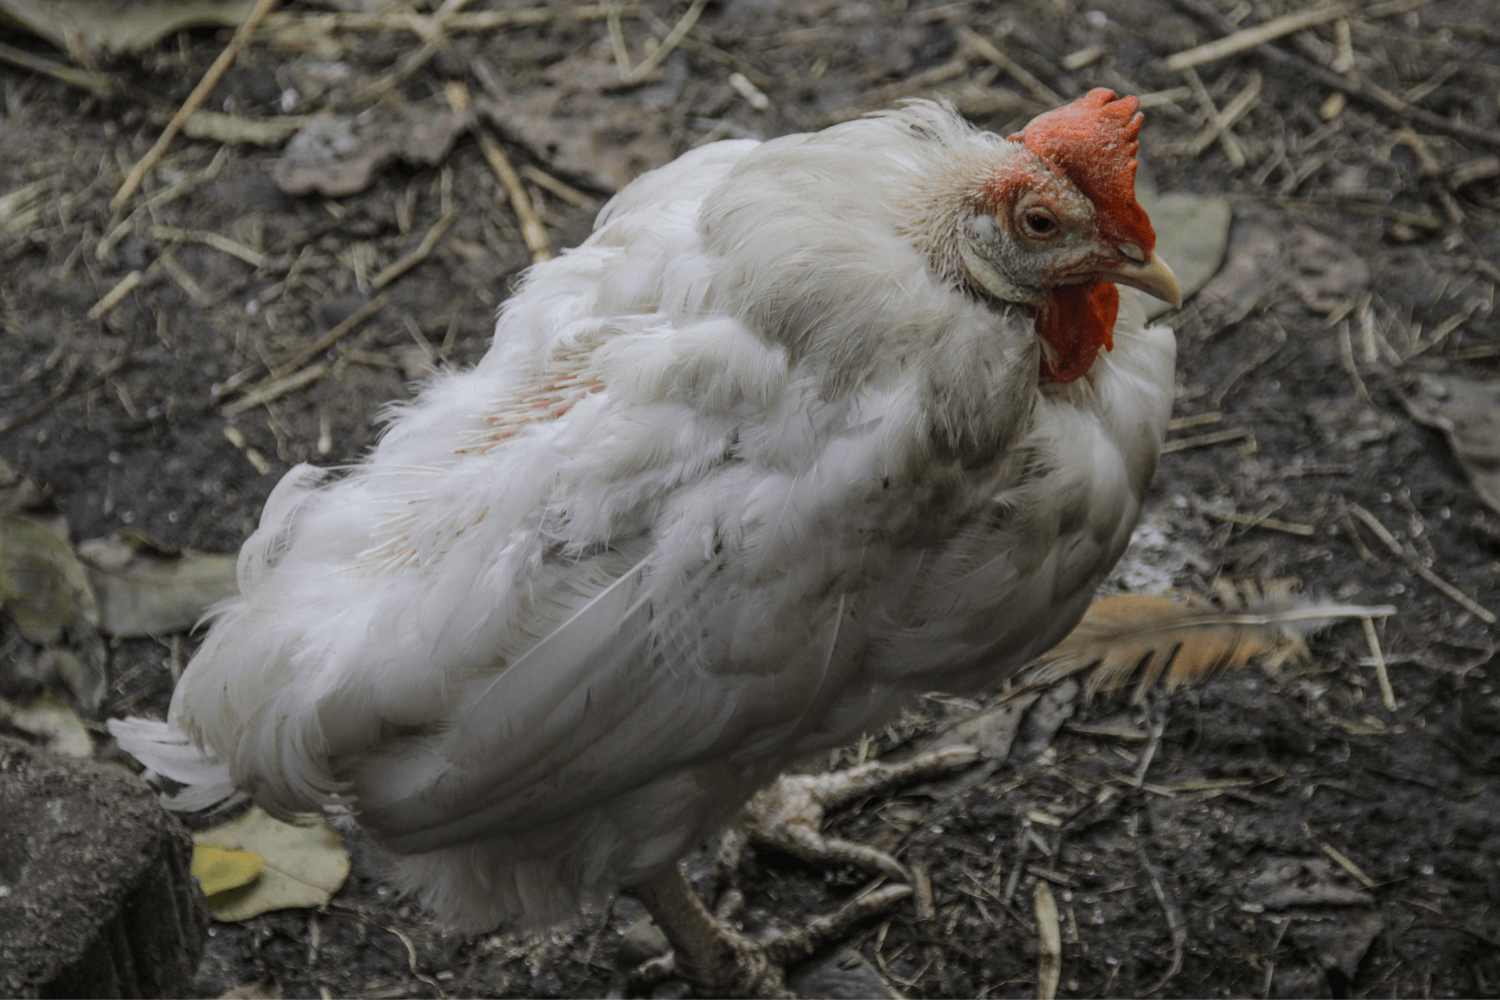 Sick backyard chicken losing feathers